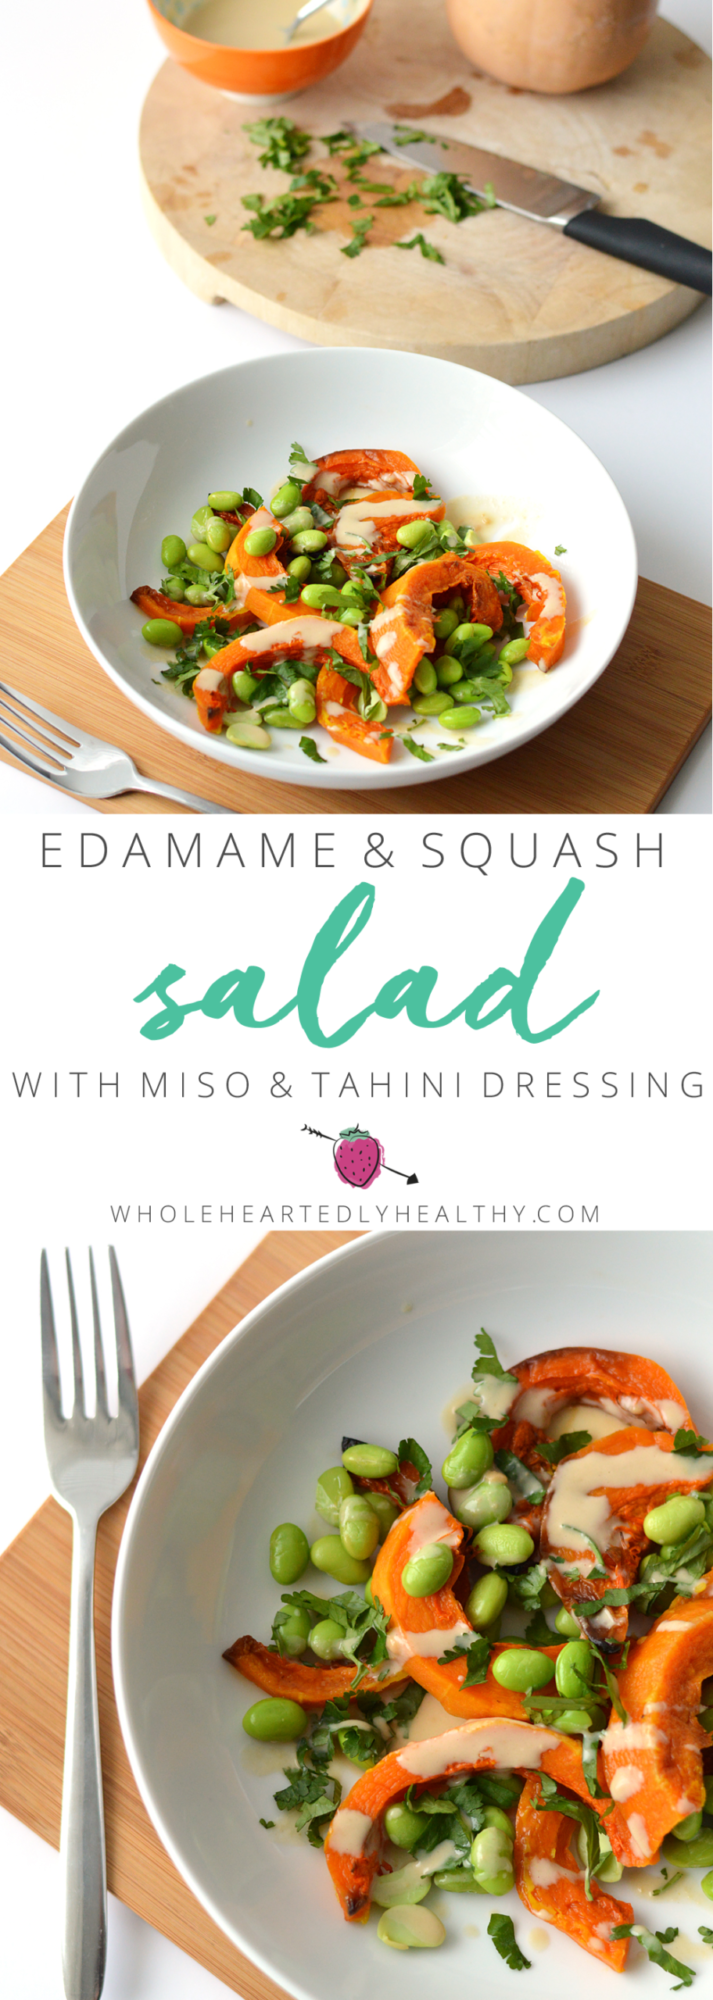 squash and edamame salad